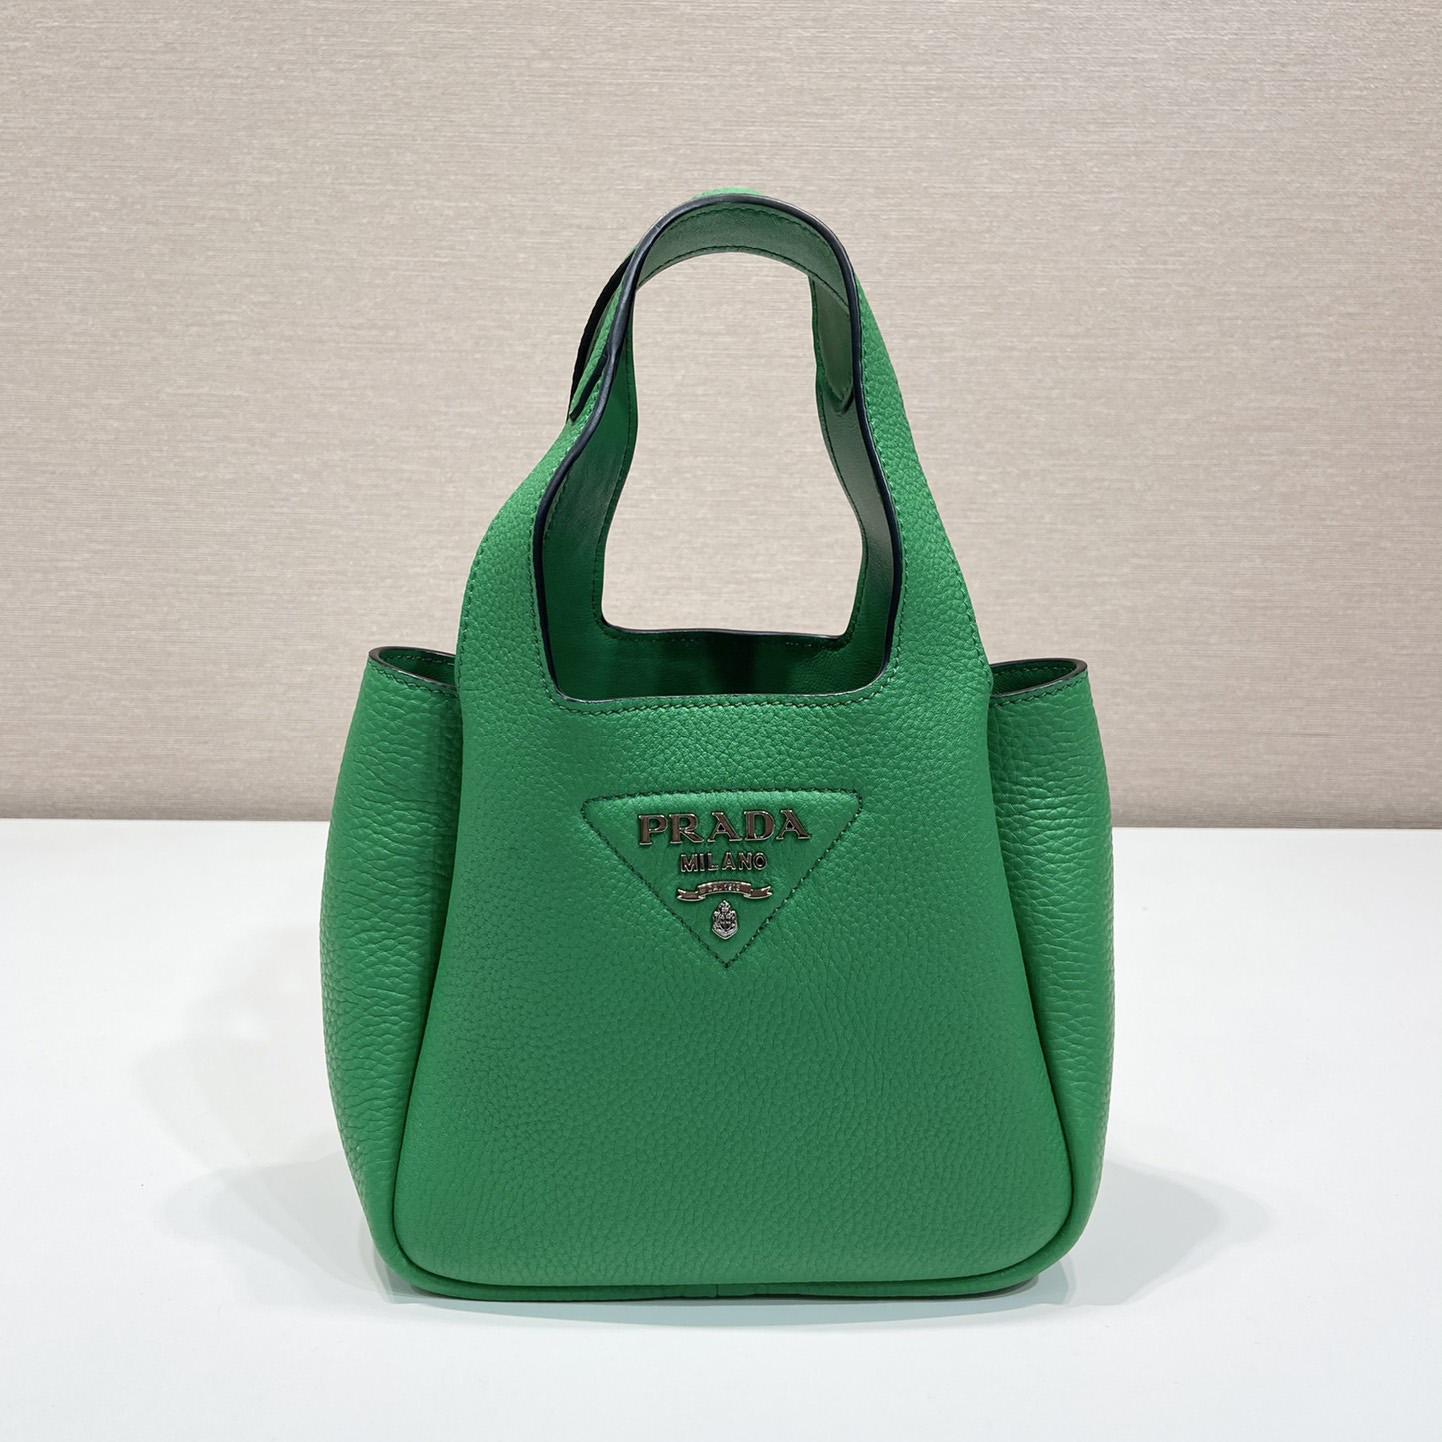 Prada Leather Handbag - DesignerGu